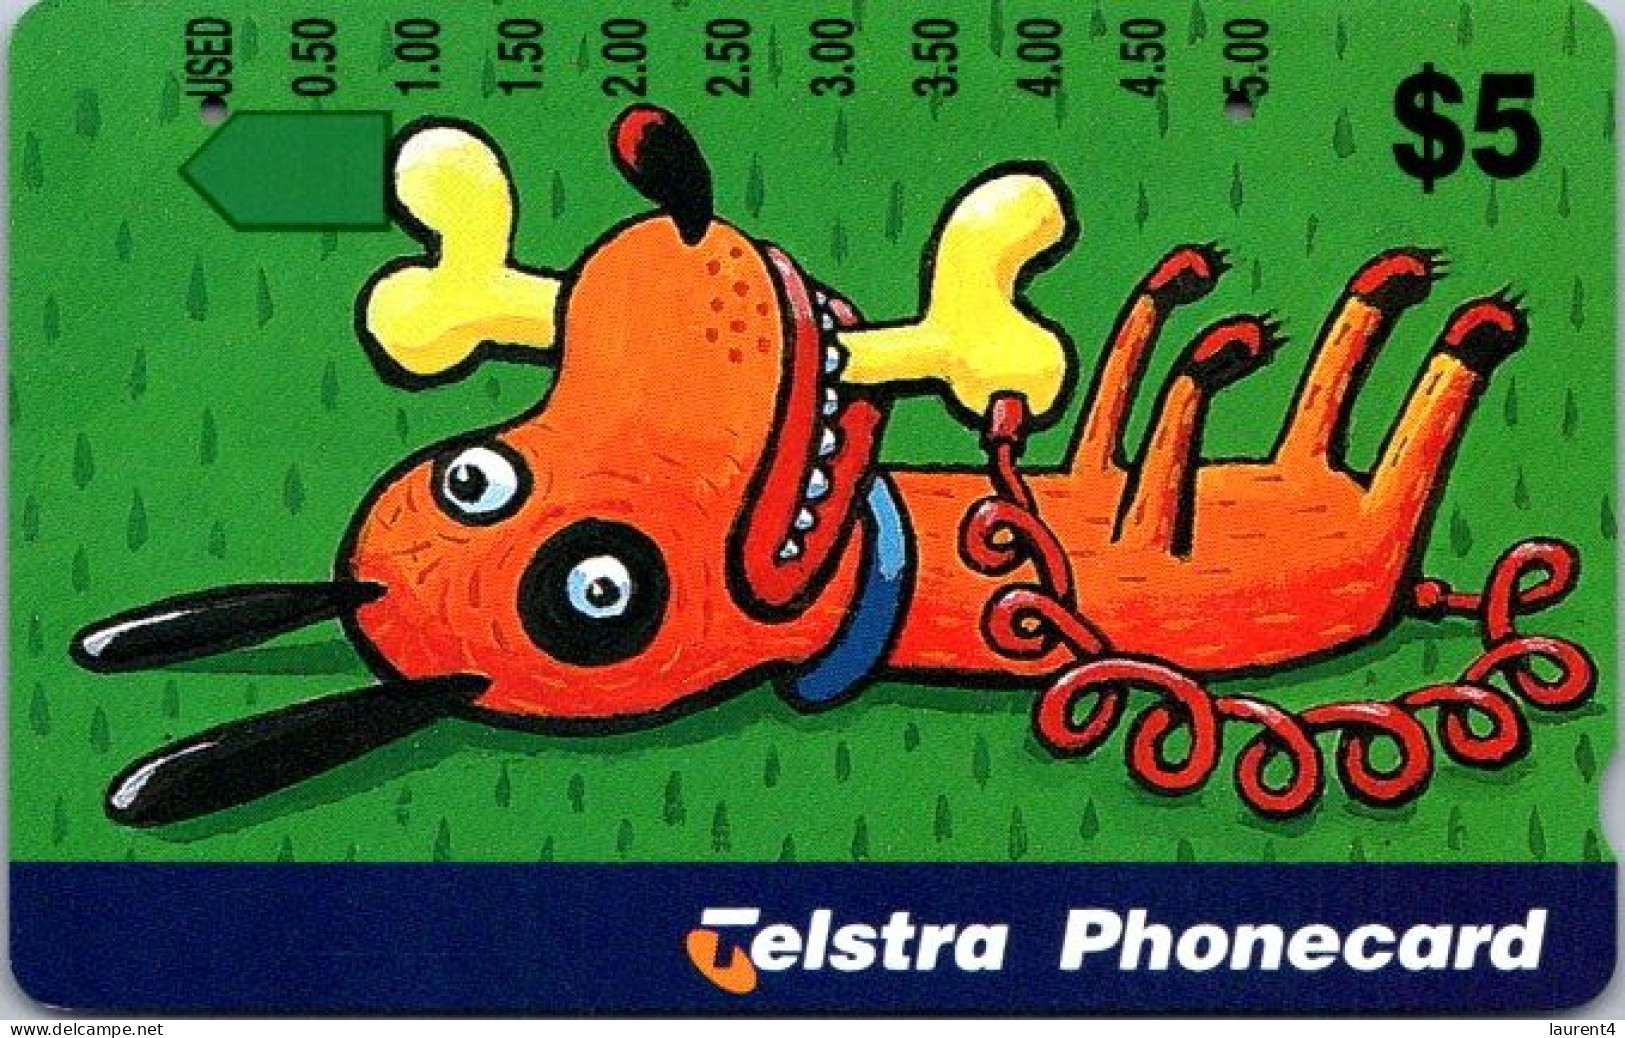 8-3-2024 (Phonecard) Humour - Dog & Bone - $ 5.00 Phonecard - Carte De Téléphoone (1 Card) - Australie